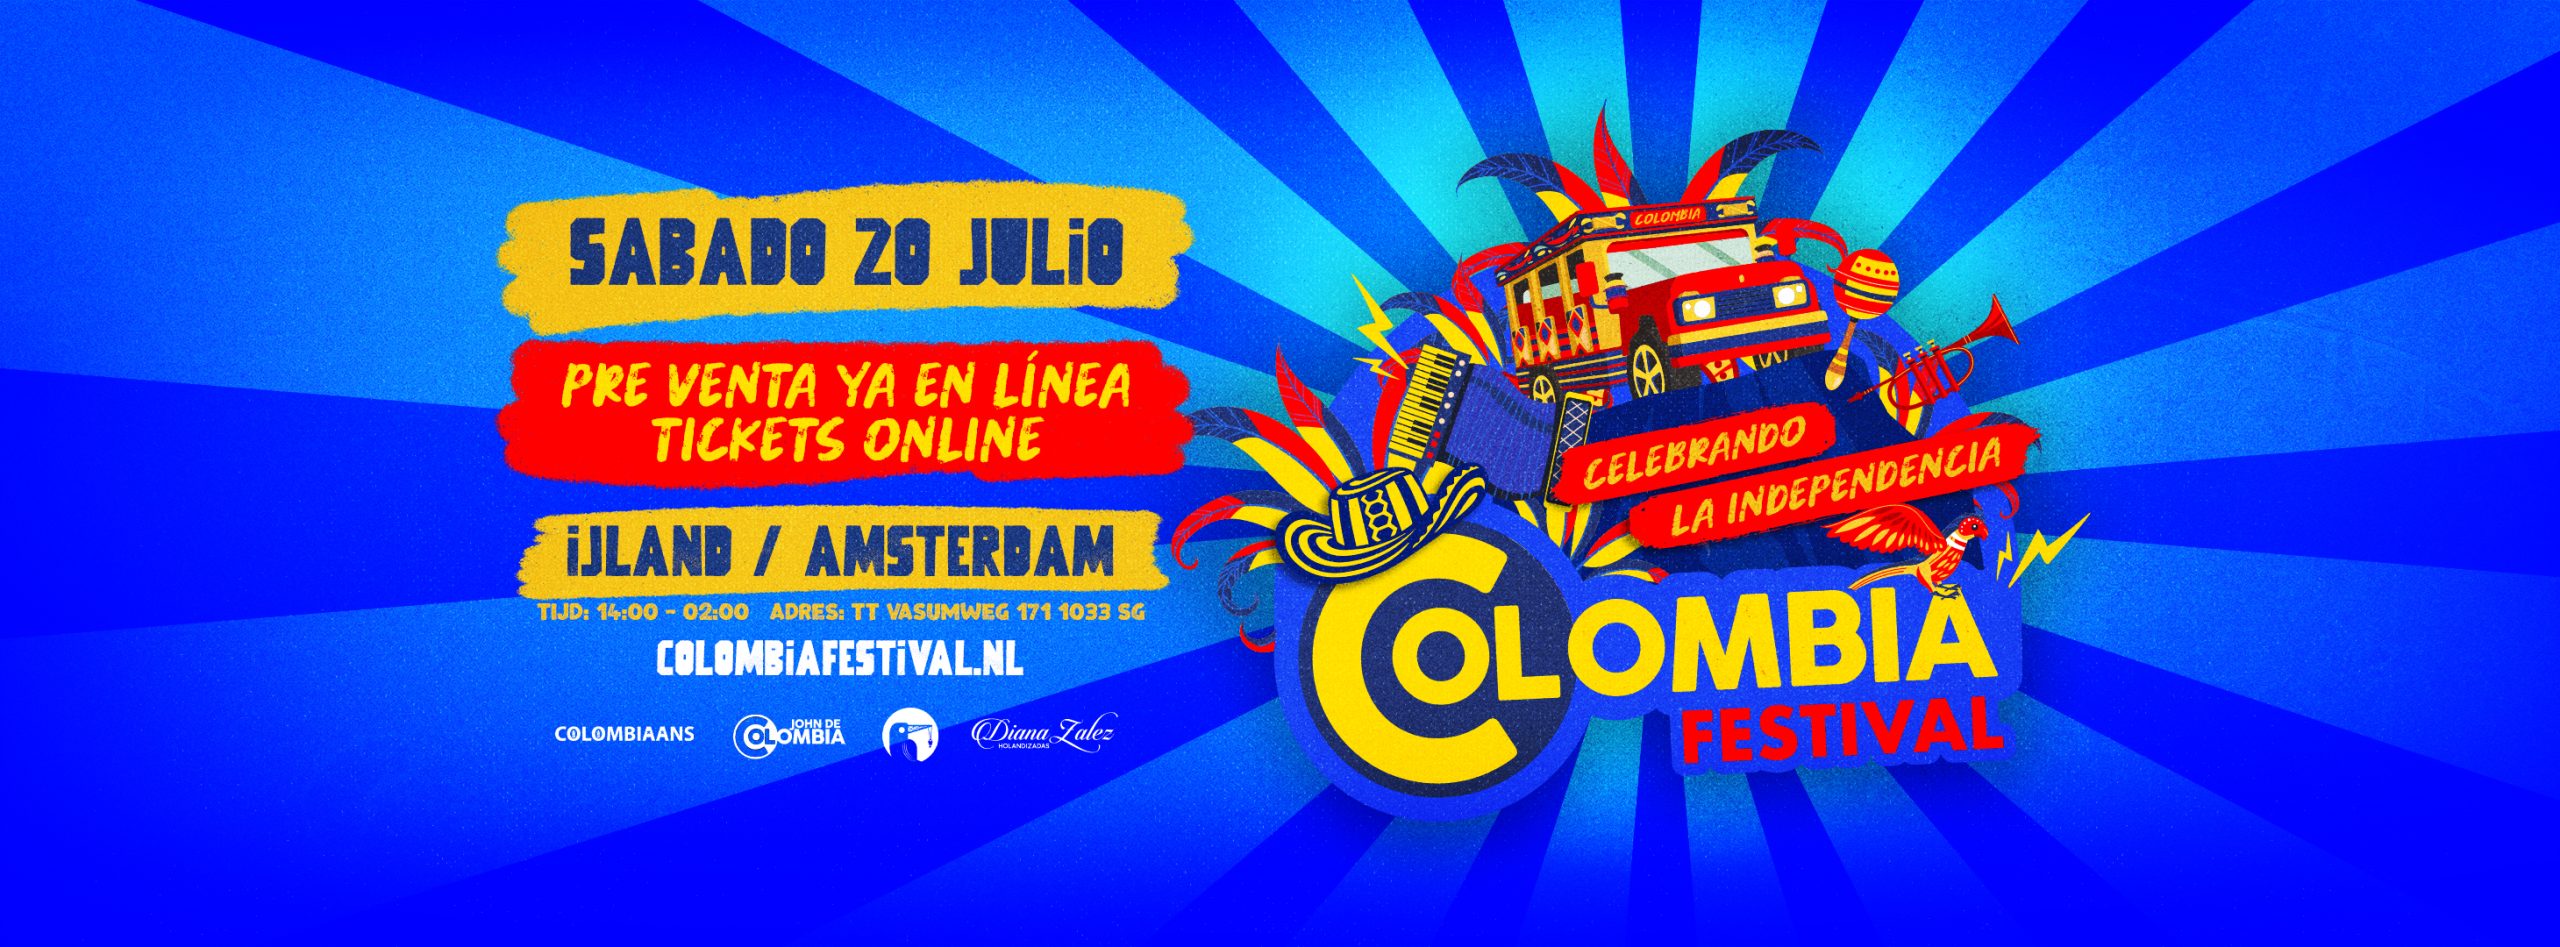 Colombiaans.nl is official partner van Colombia Festival